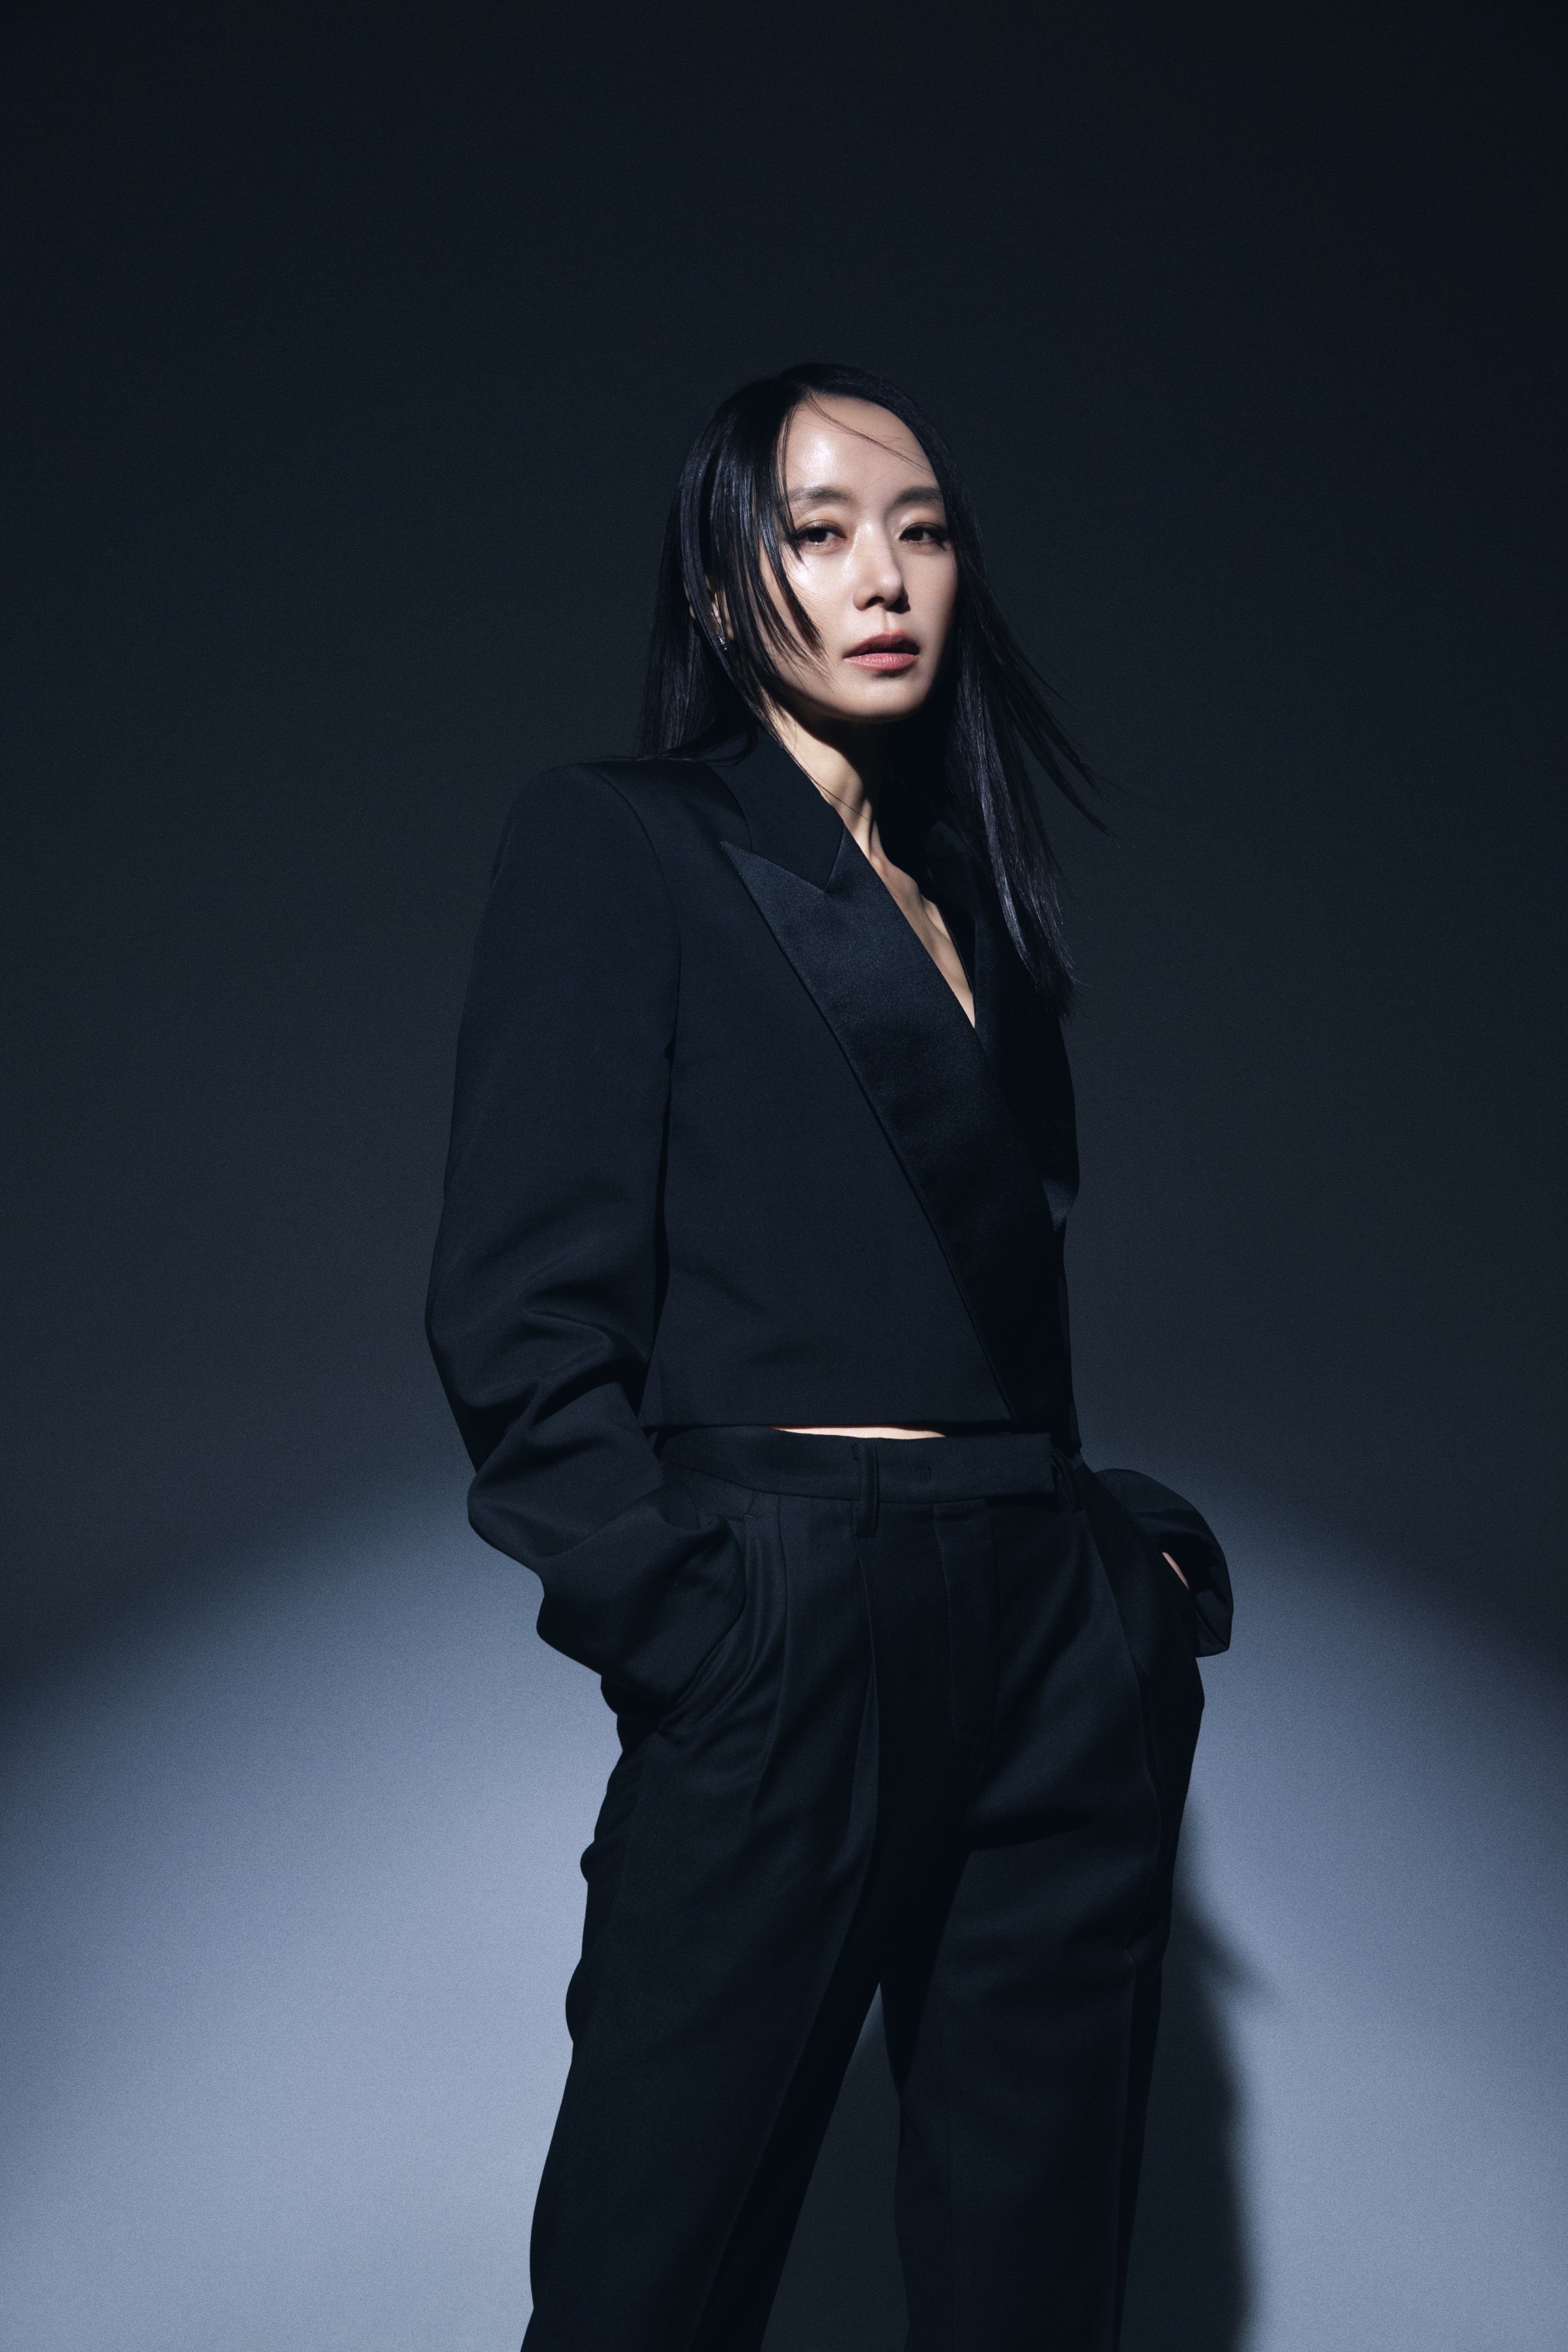 Korean actress Jeon Do-yeon, star of the new action thriller Kill Boksoon, is having a moment. Photo: Netflix.